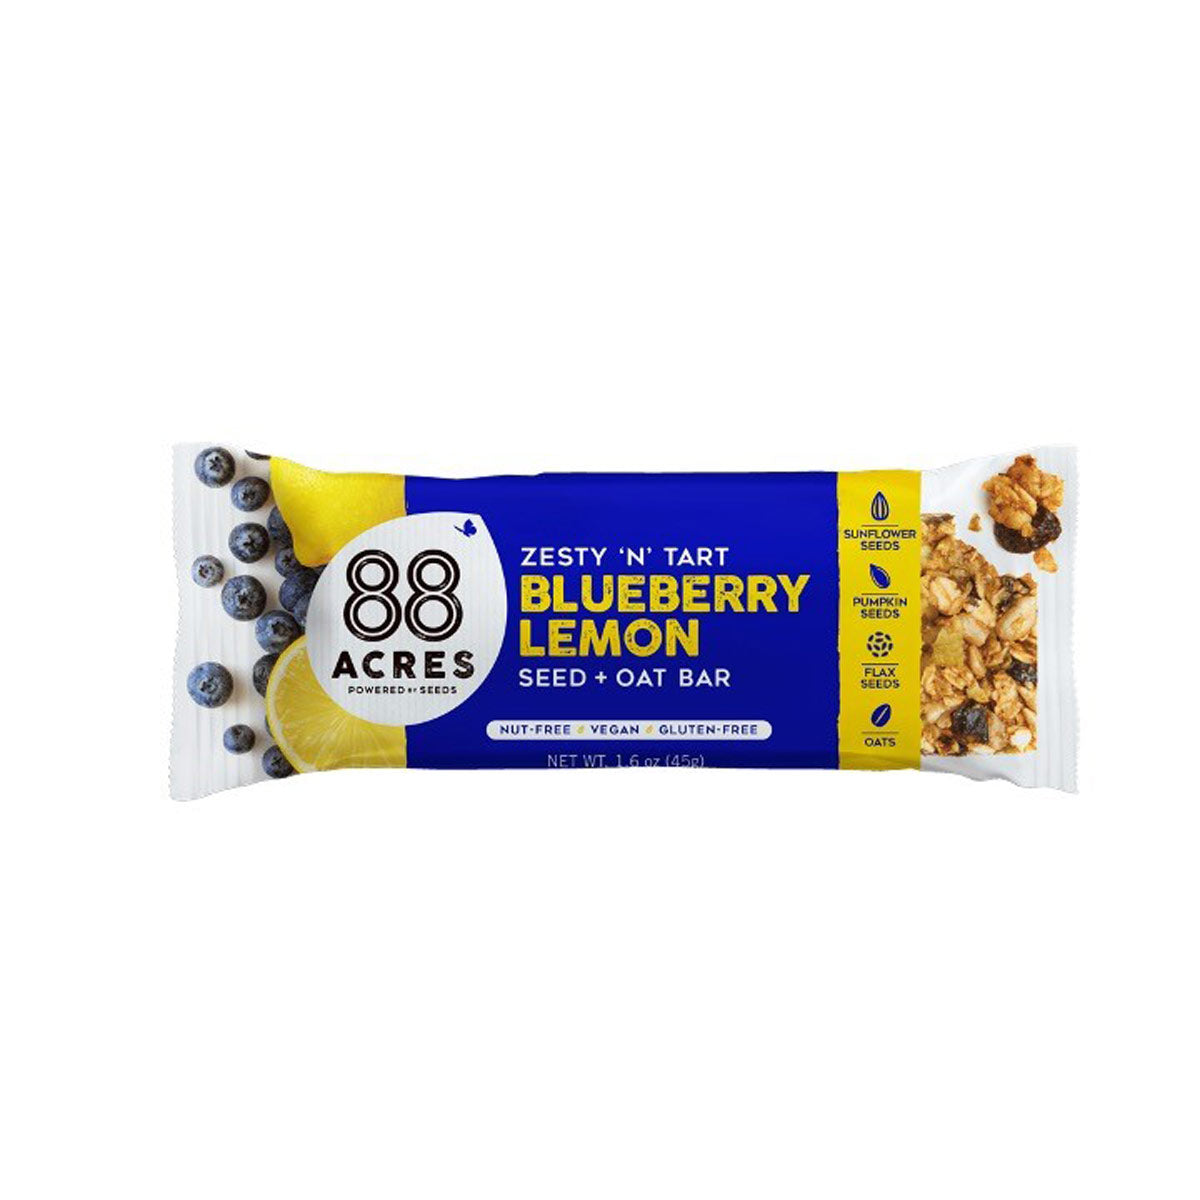 88 Acres Blueberry Lemon Seed & Oat 1.6 Oz Bar